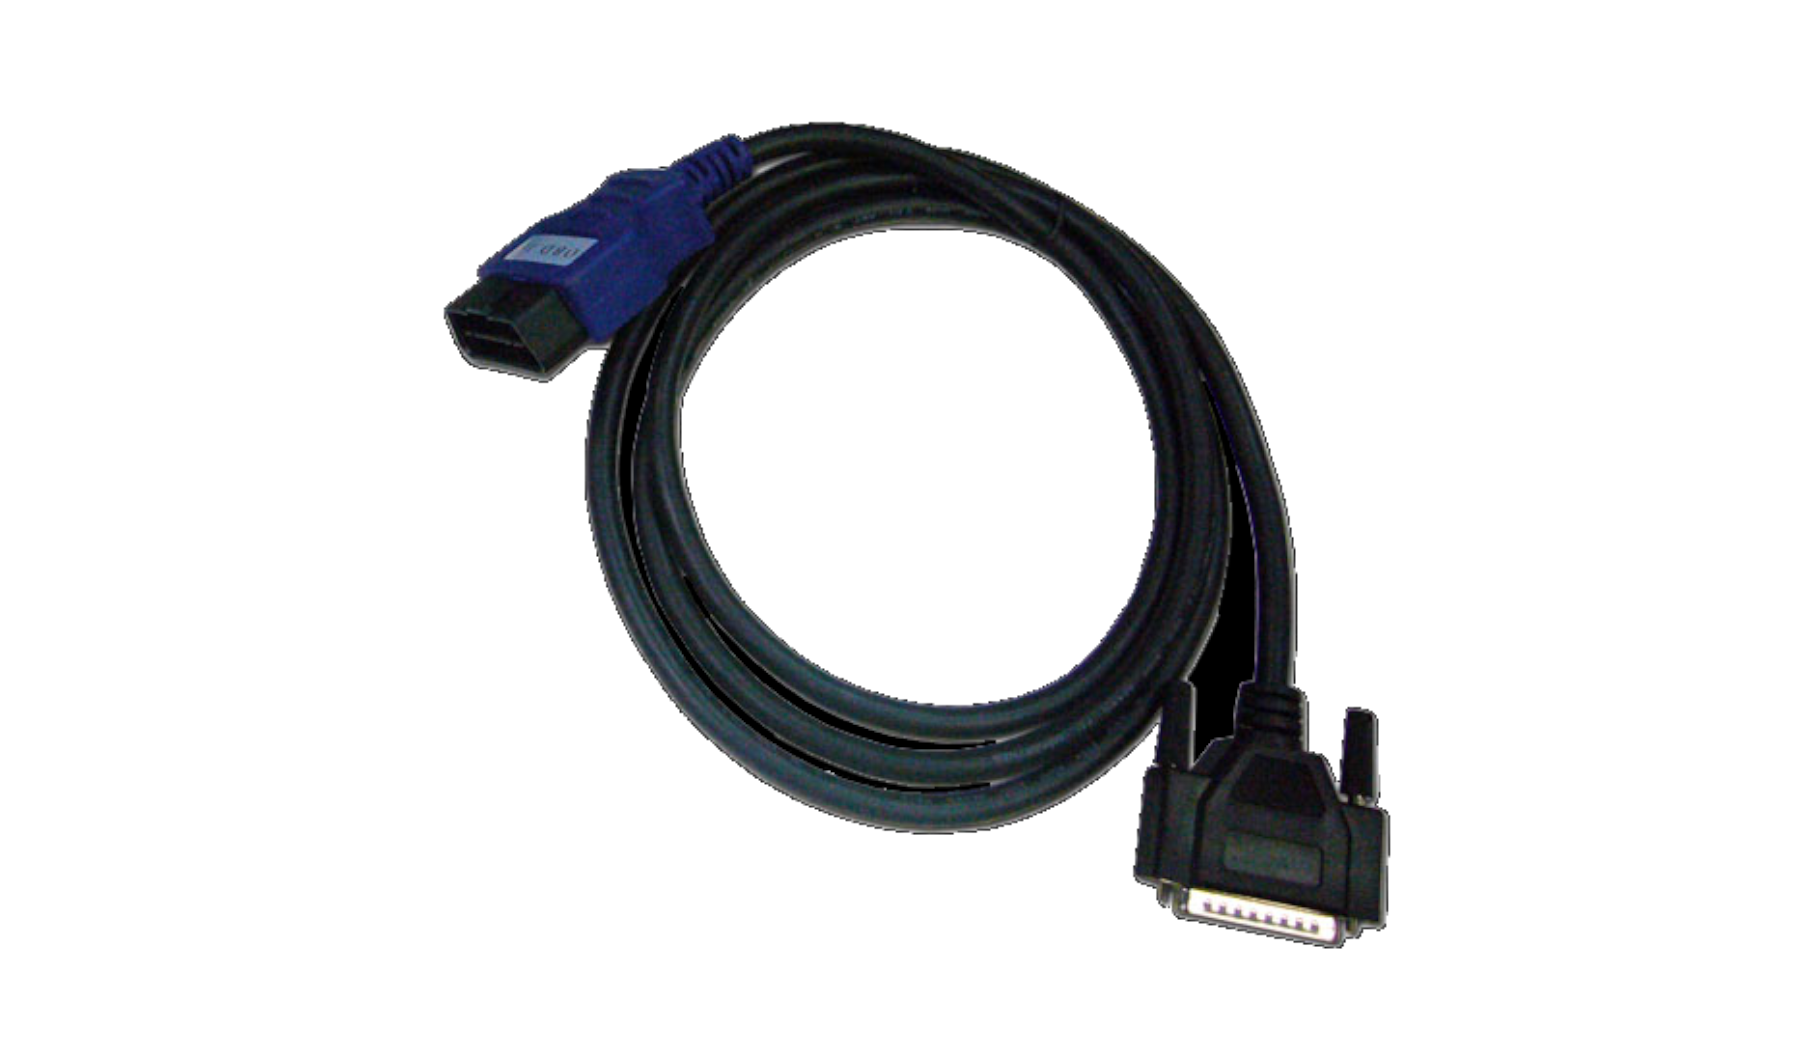 Set of 8 OBD car cables compatible with AutoCom, Delphi, WoW – DiagSystems